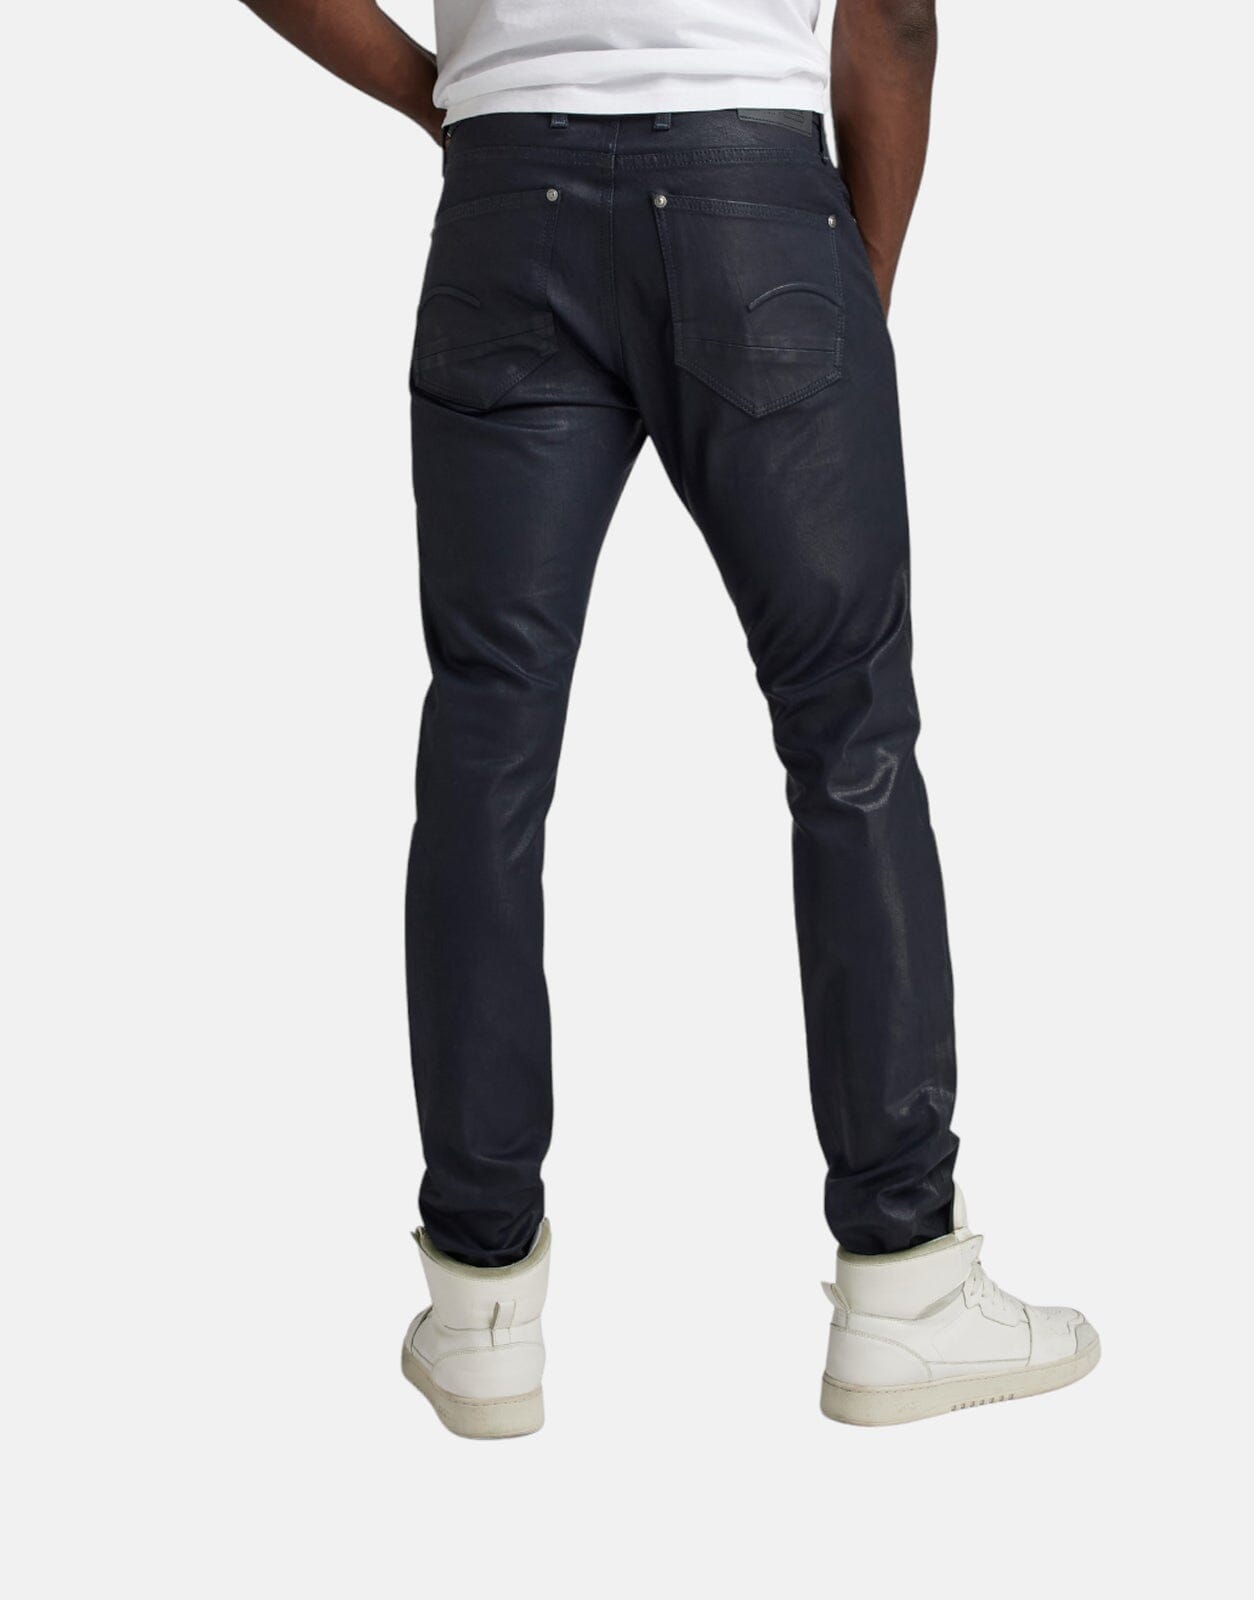 G-Star RAW Revend Skinny Wax Blue Jeans - Subwear